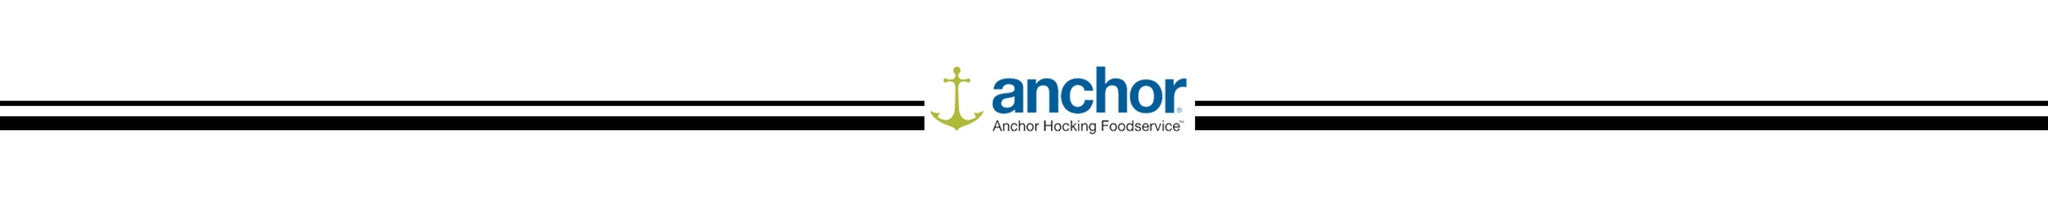 Salt & Peppers Archives - Anchor Hocking FoodserviceAnchor Hocking